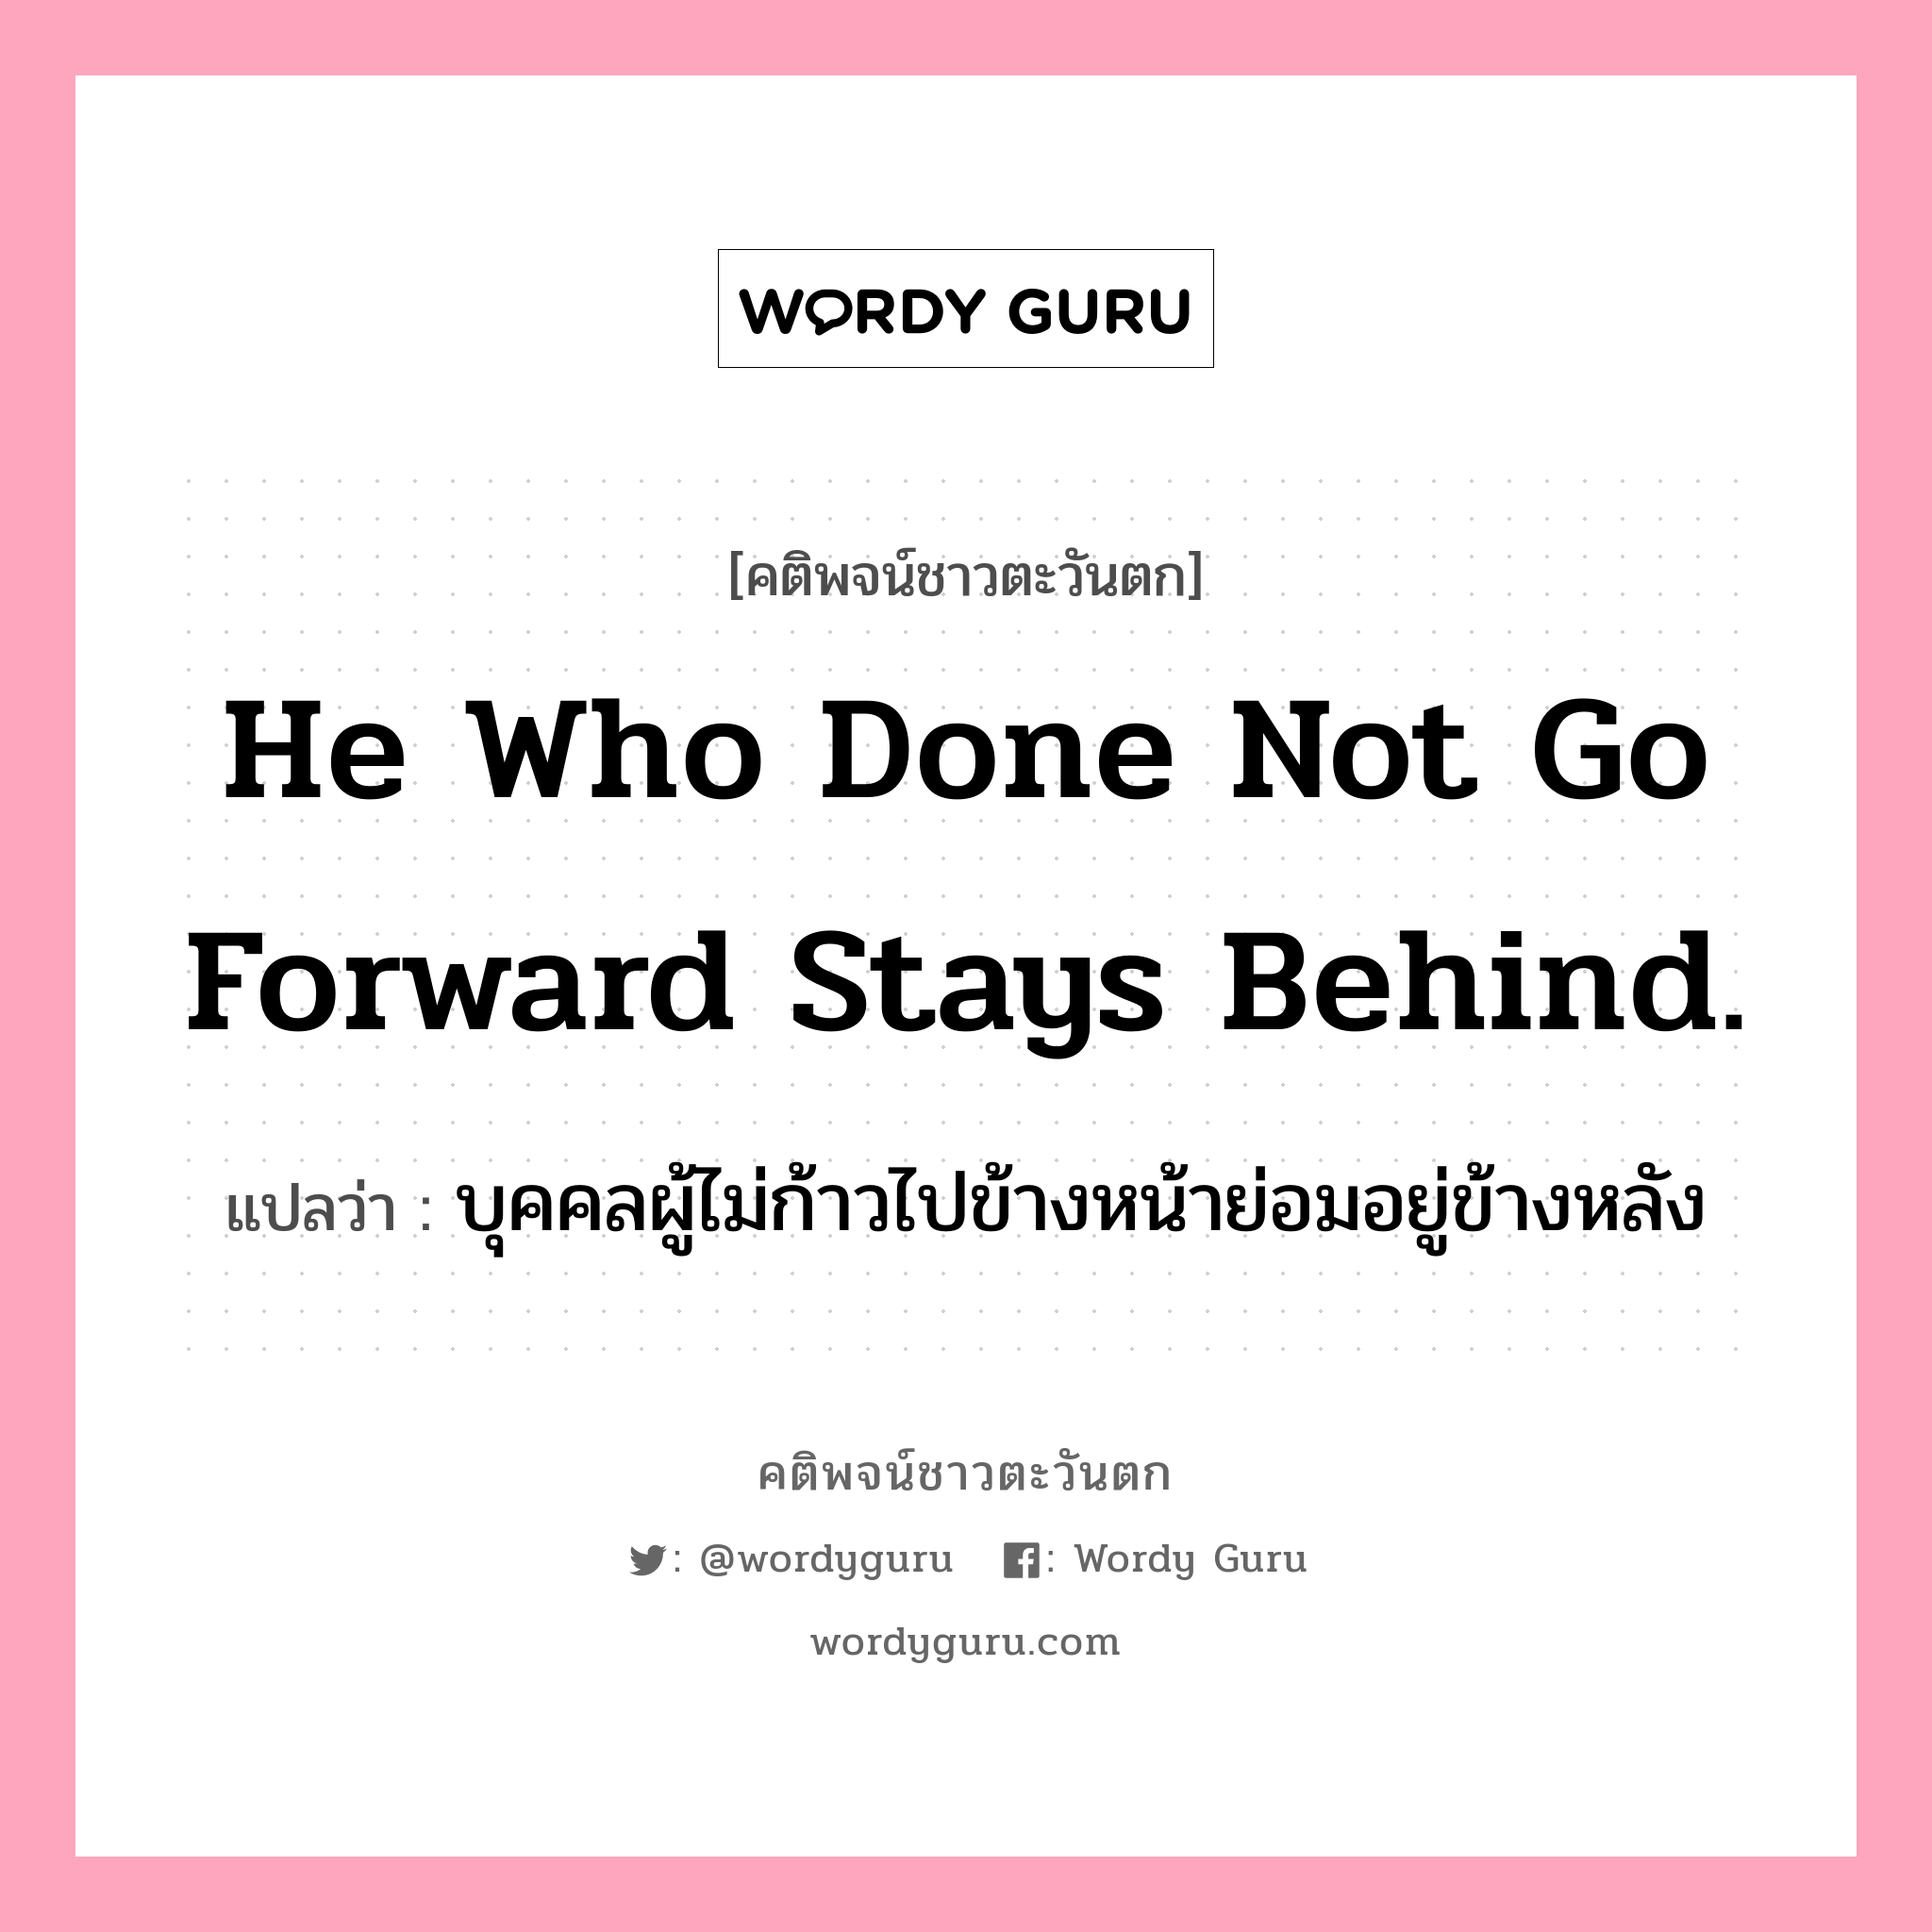 He who done not go forward stays behind., คติพจน์ชาวตะวันตก He who done not go forward stays behind. แปลว่า บุคคลผู้ไม่ก้าวไปข้างหน้าย่อมอยู่ข้างหลัง